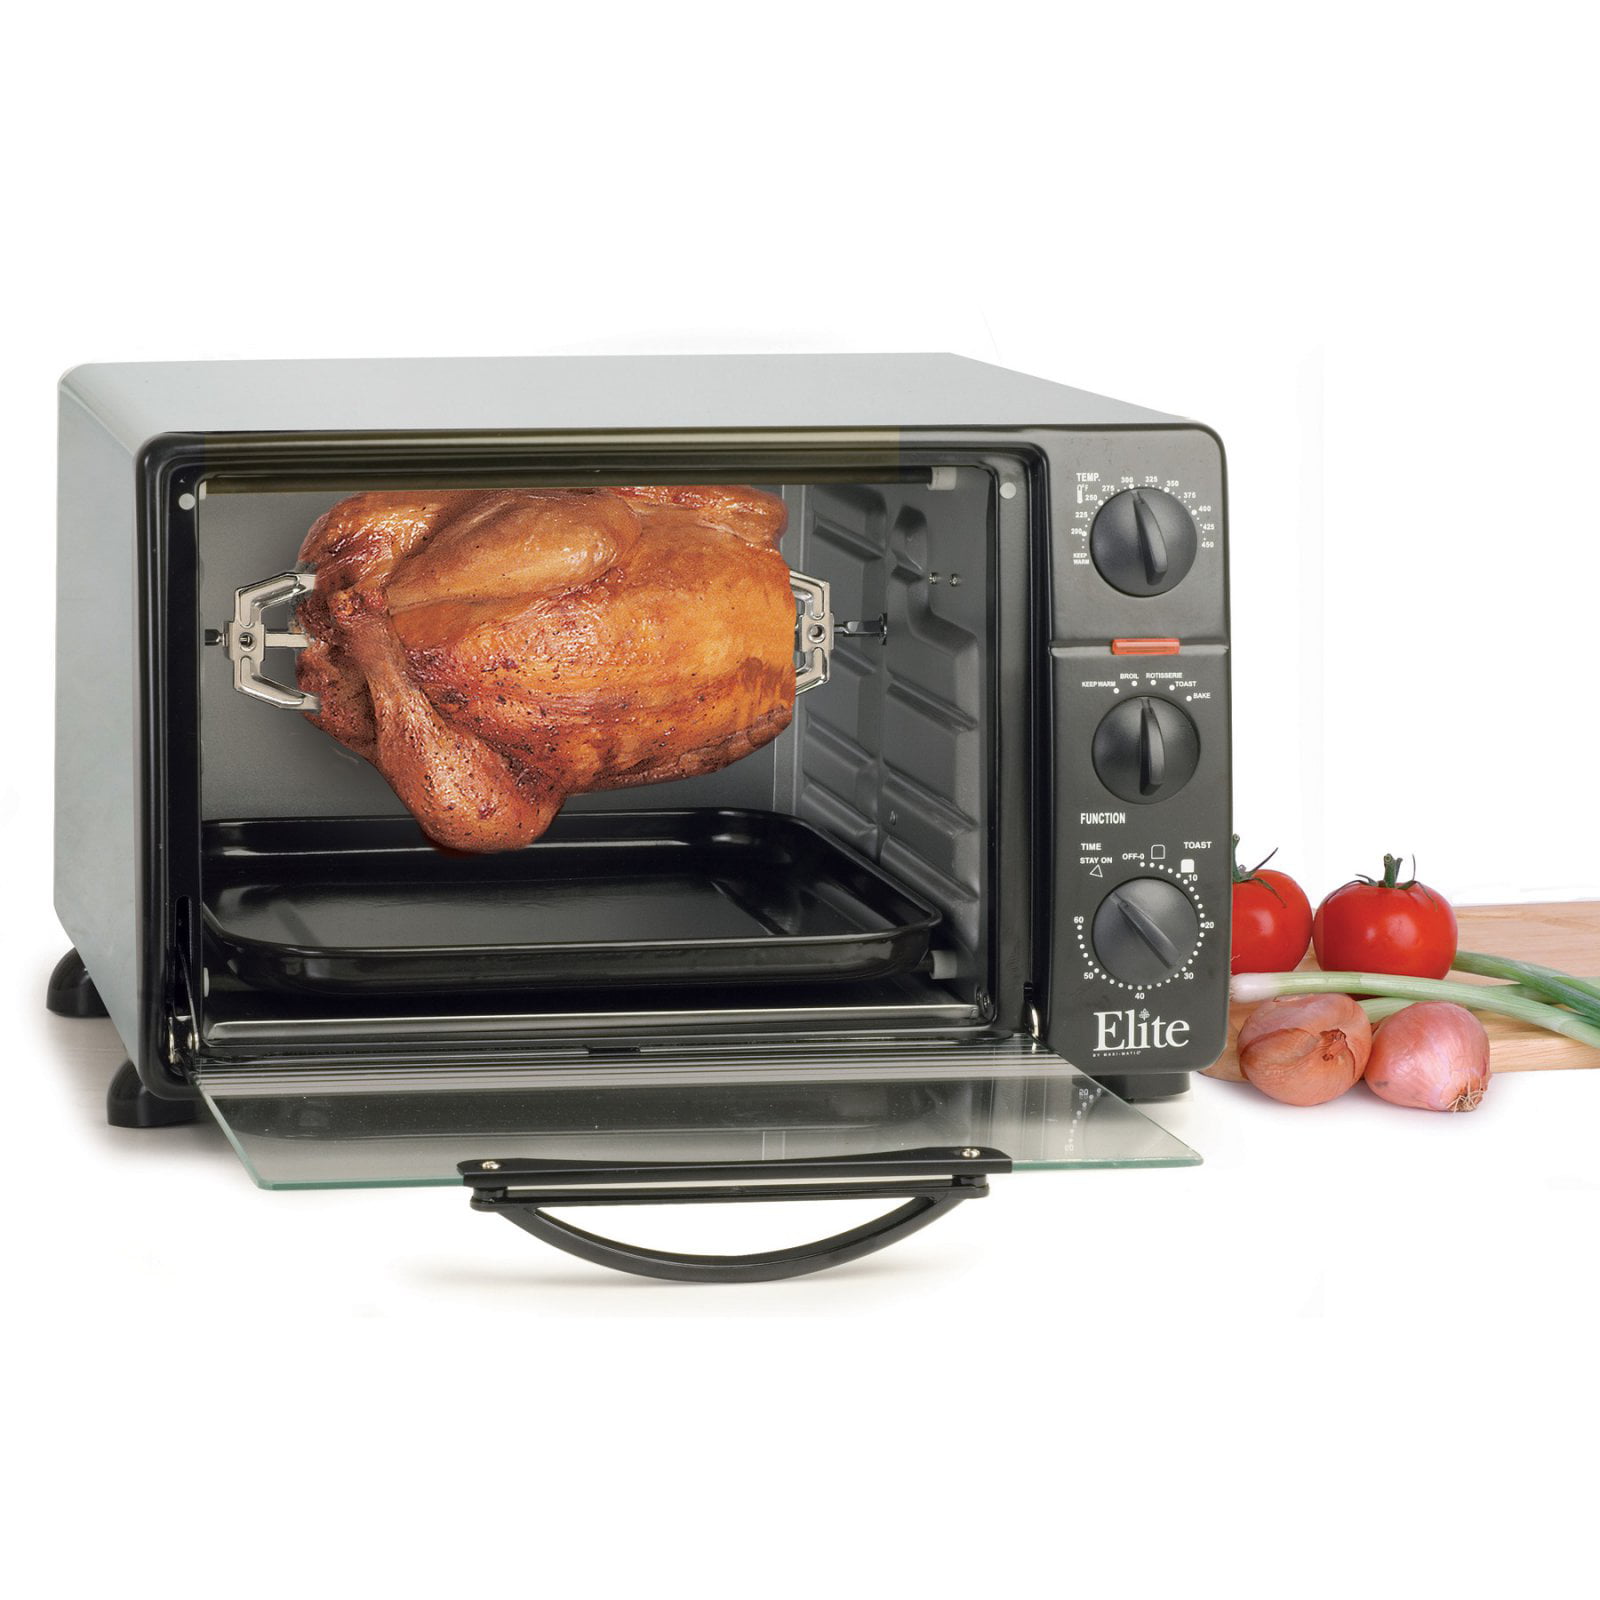 Elite Cuisine 23-Liter Toaster Oven with Rotisserie - Walmart.com